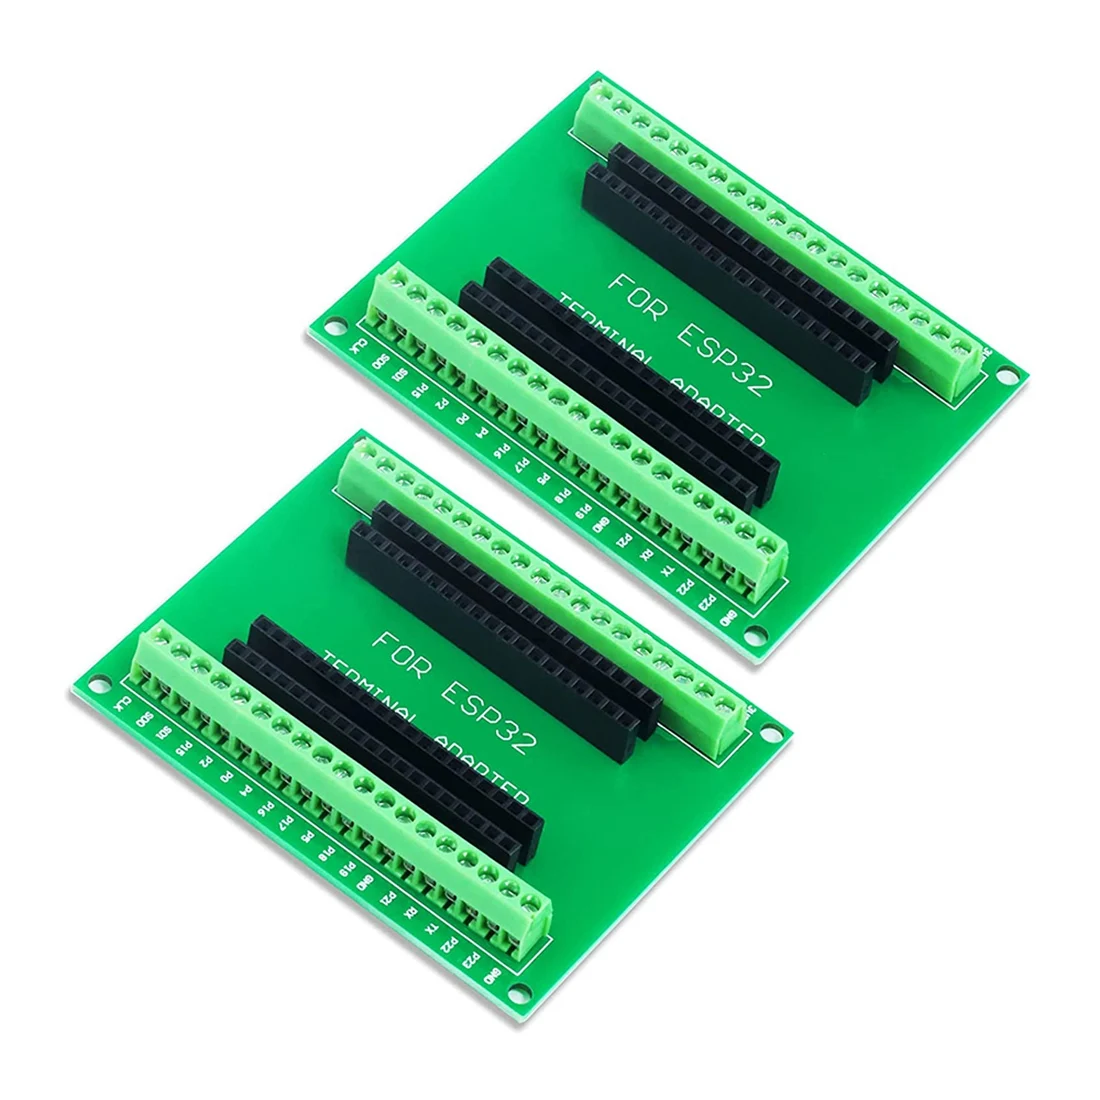 

2Pcs ESP32 Breakout Board GPIO 1 Into 2 for 38PIN Narrow Version ESP32 ESP-WROOM-32 Microcontroller Development Board